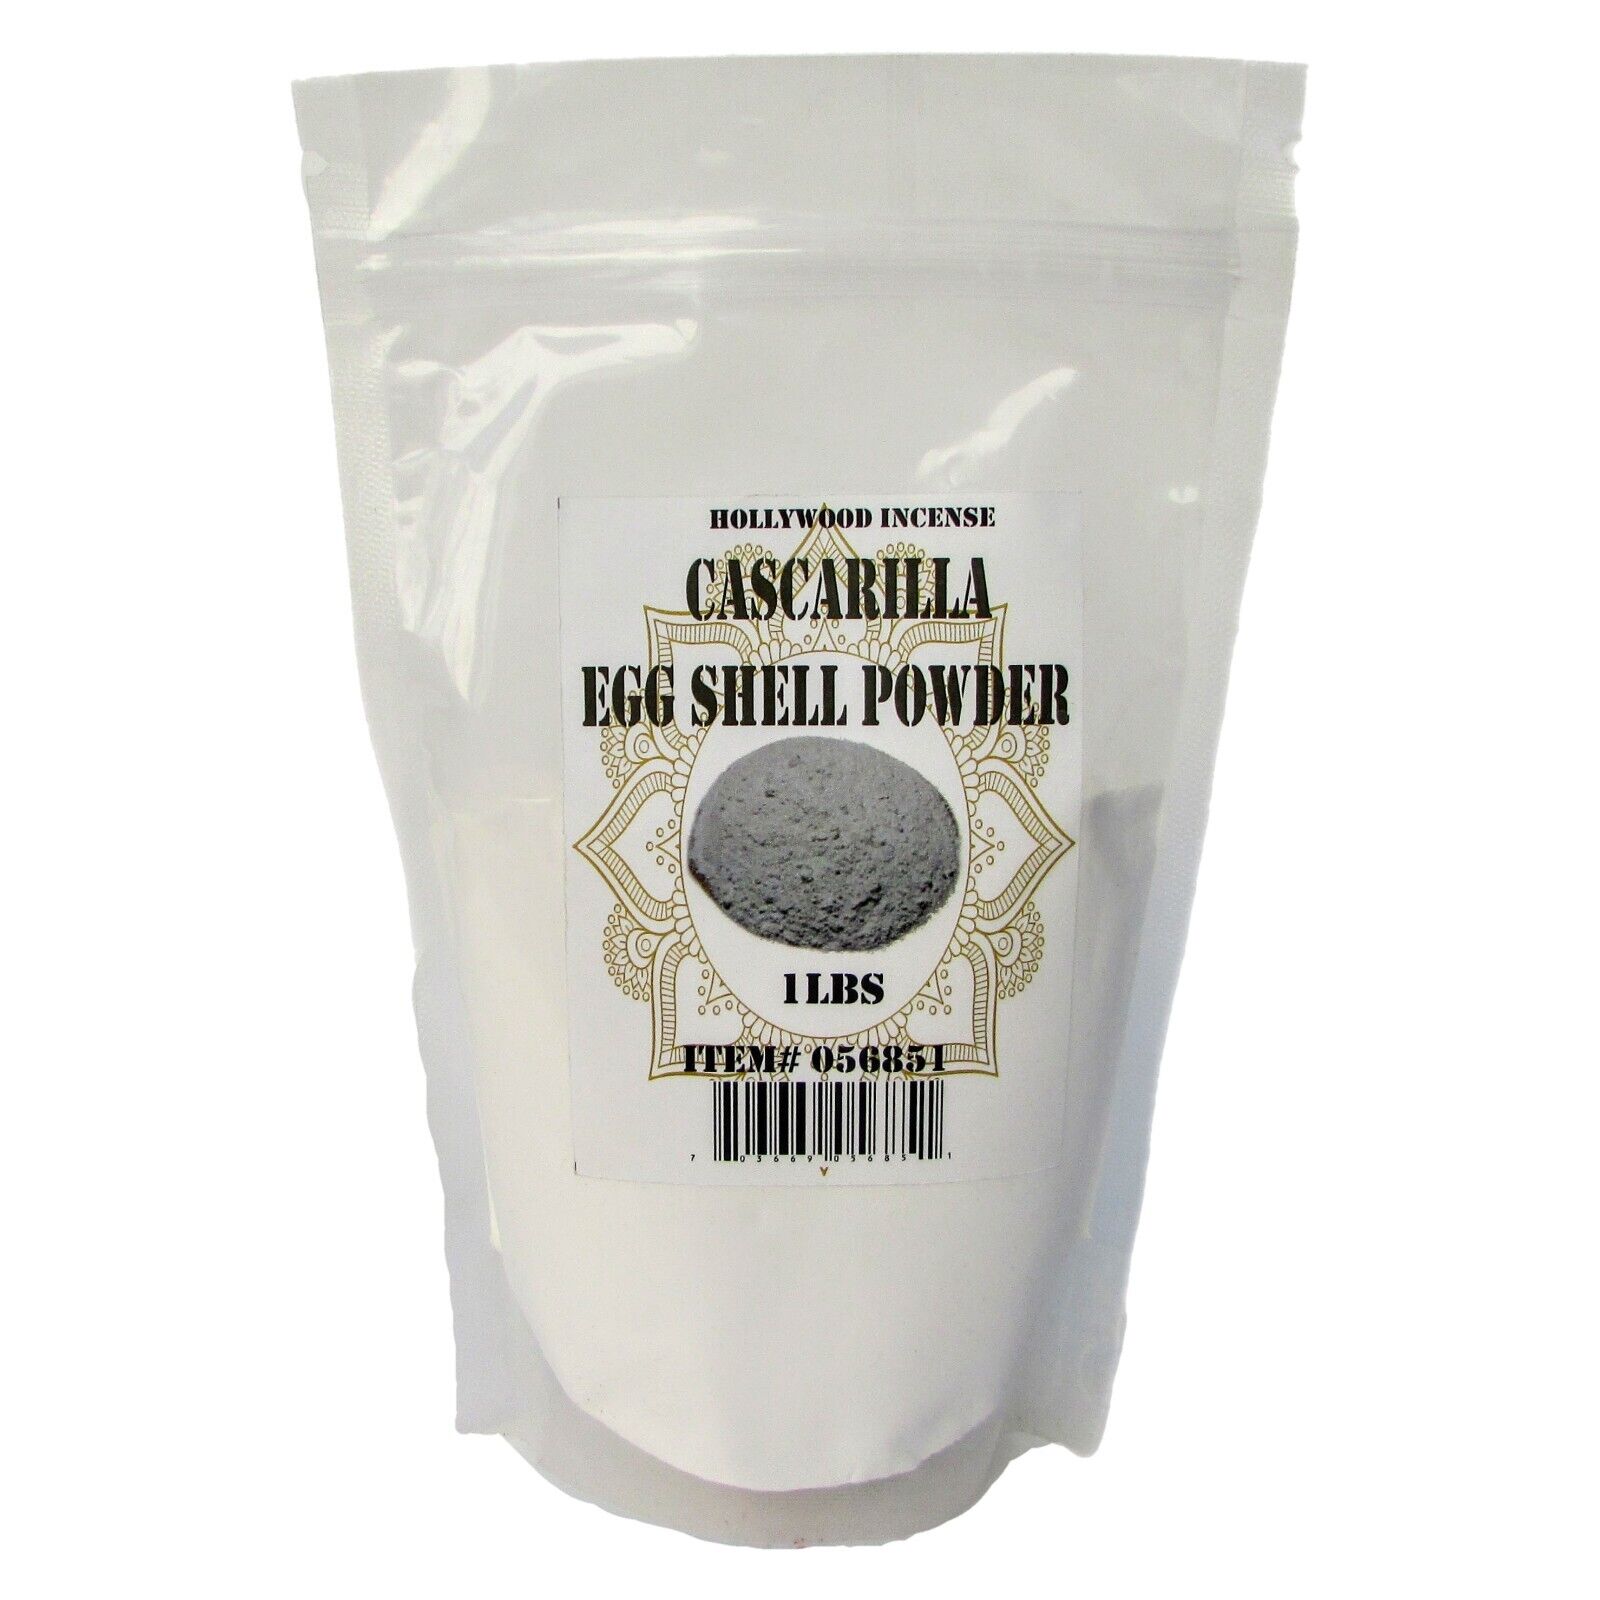 CASCARILLA - 1 LIBRA / Efun Powdered Egg Shell Power WHITE Santeria 1 LB Bag